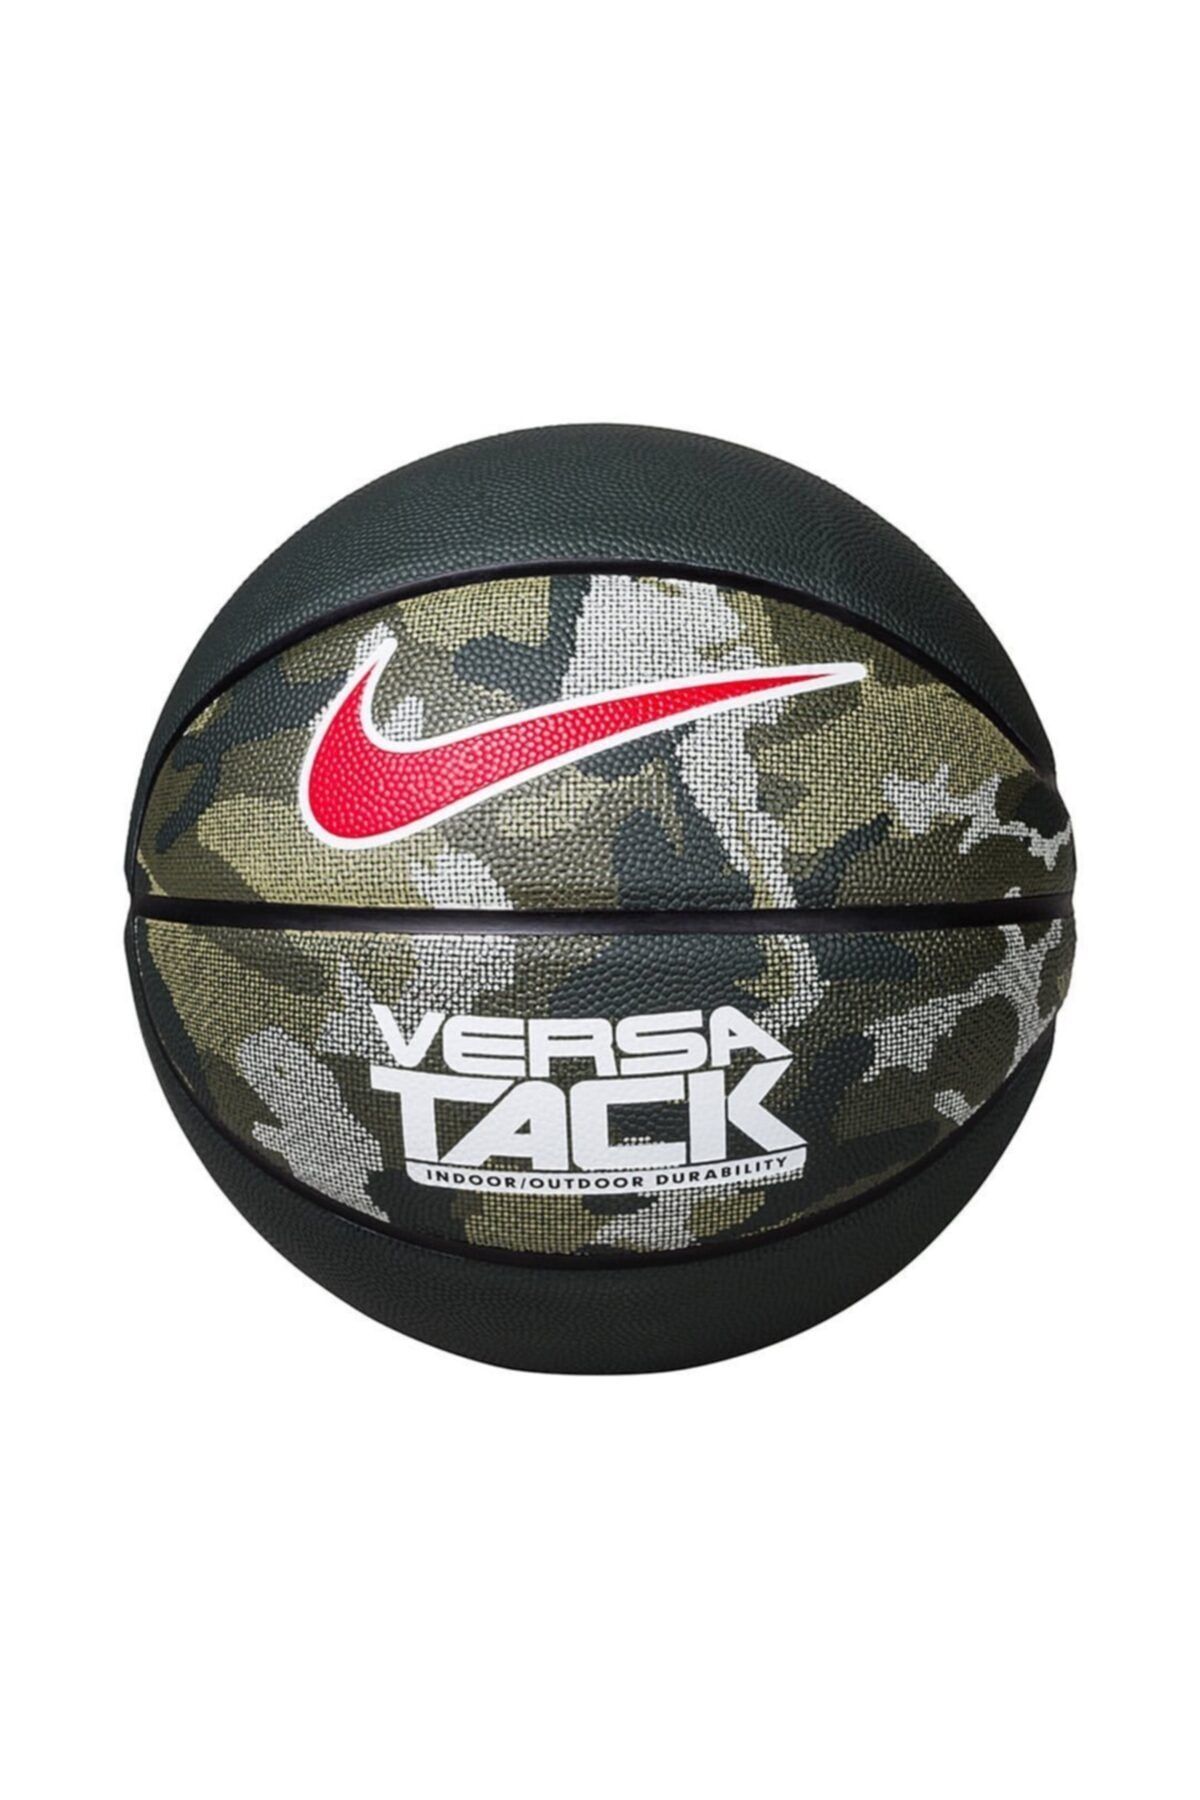 Nike NKI01-965 Versa Tack Deri 7 No Basketbol Topu